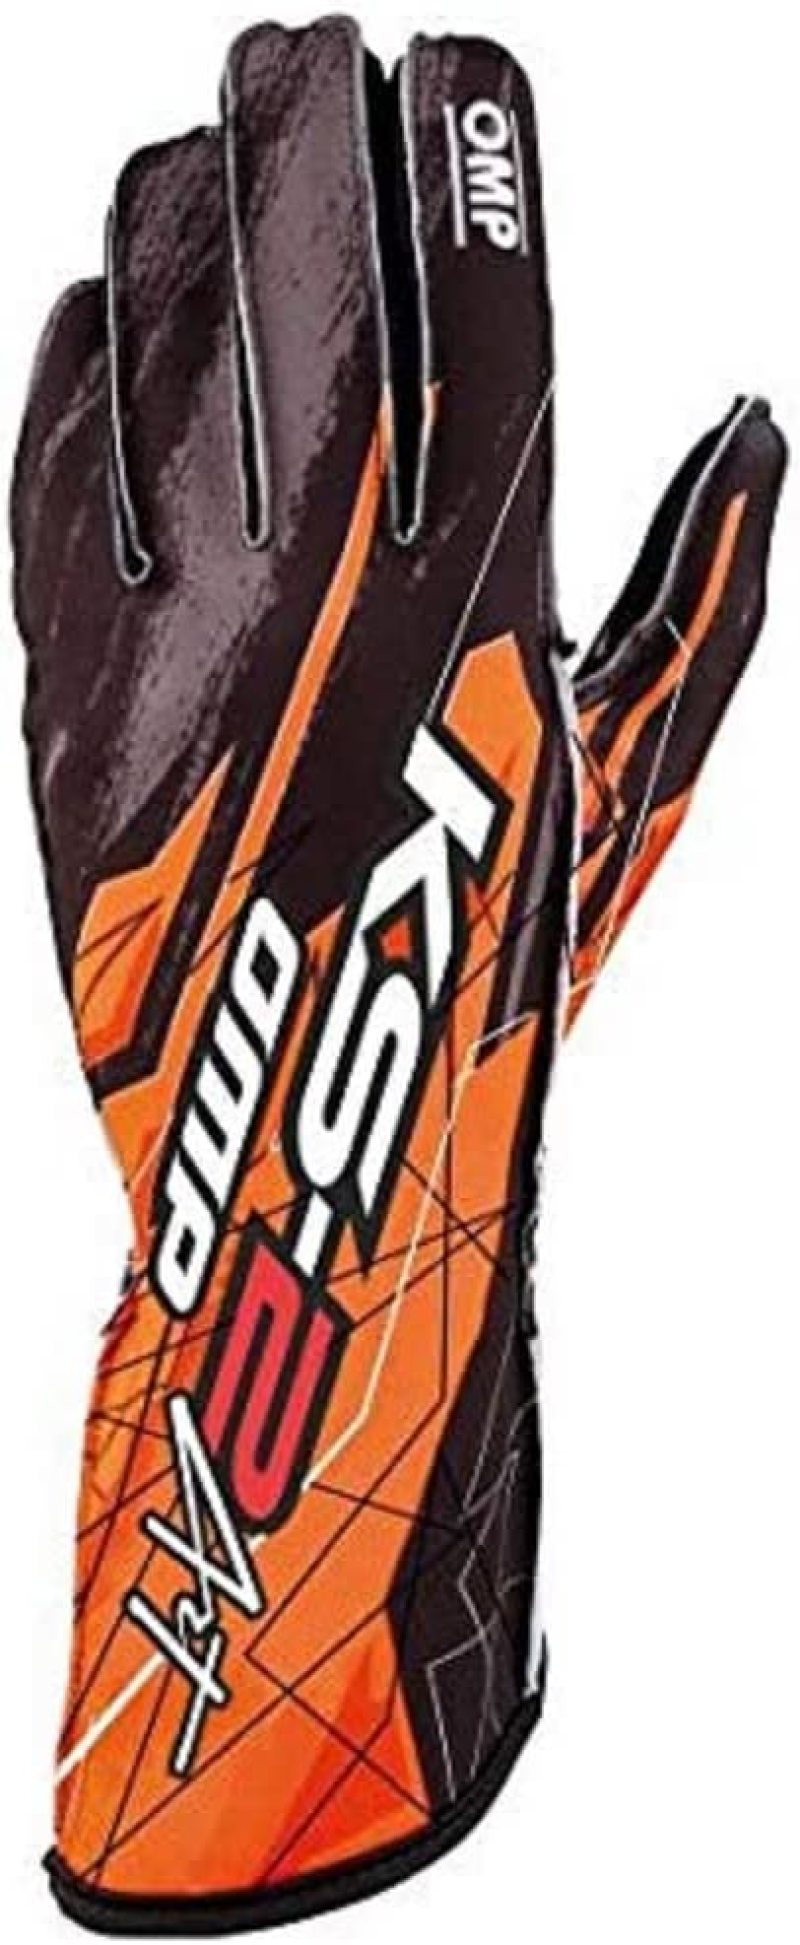 OMP KS-2 Art Gloves Black/Orange - Size L - KB0-2748-A01-179-L